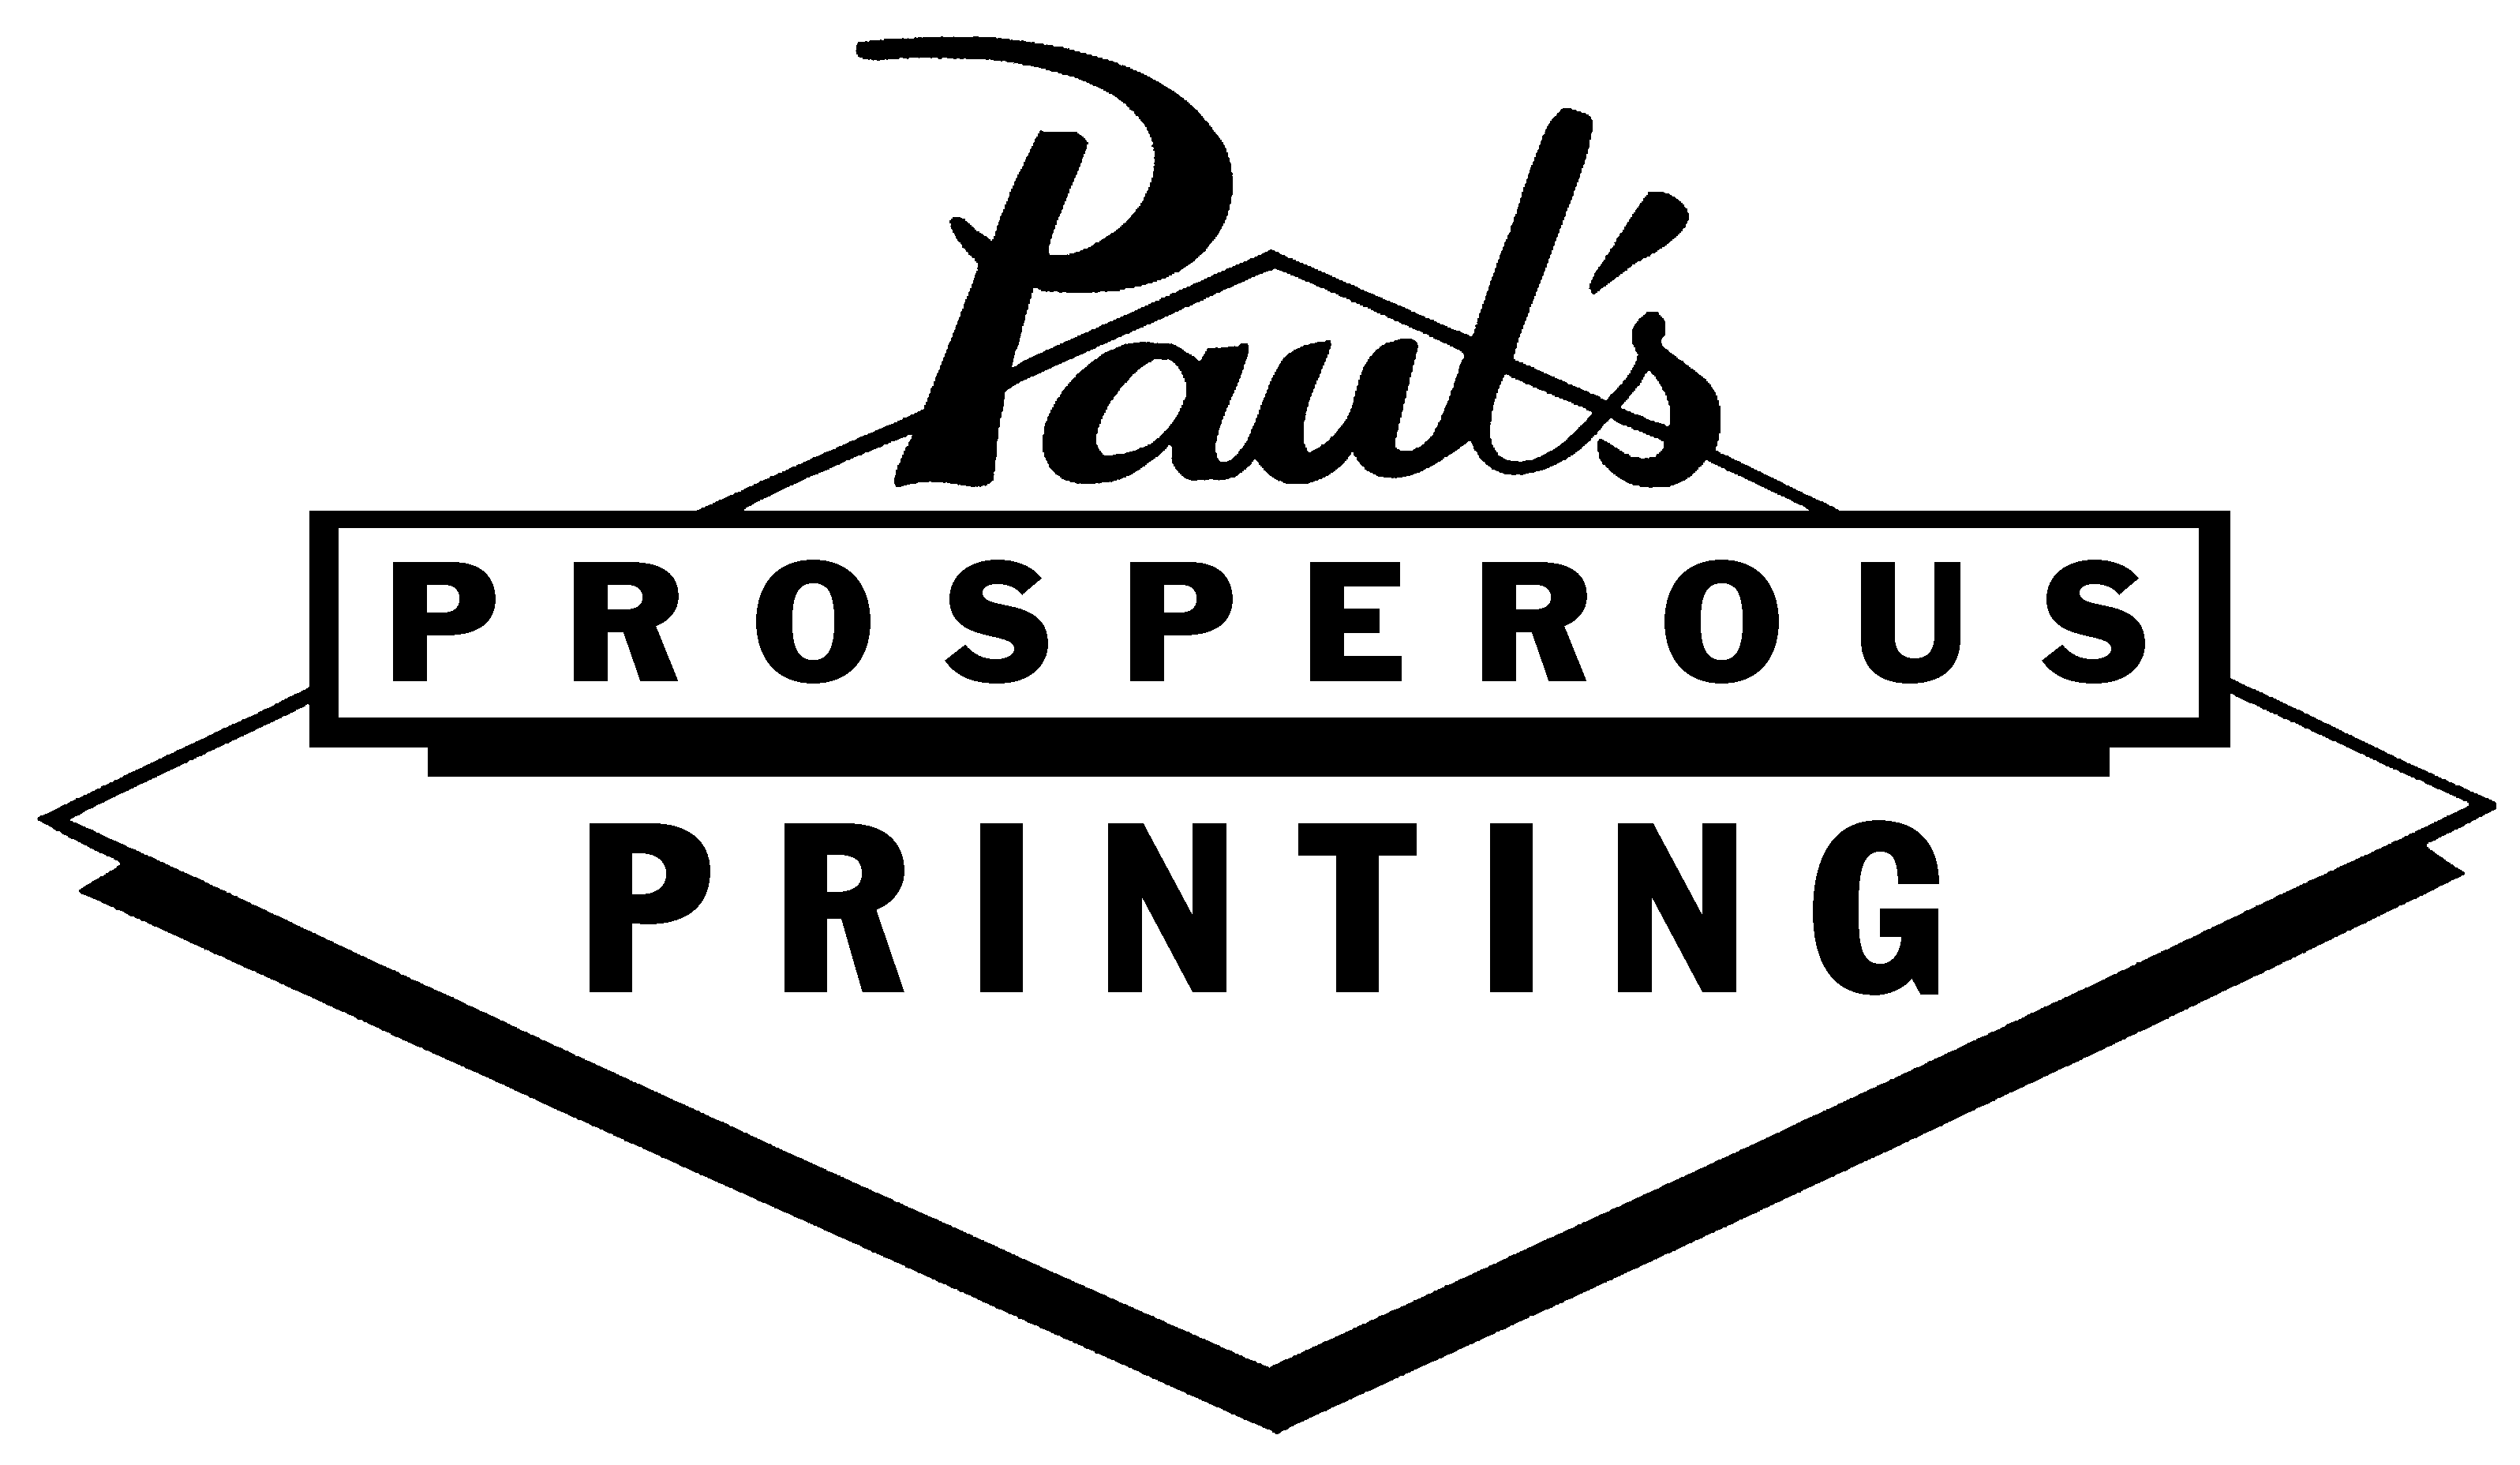 Paul's Prosperous Printing